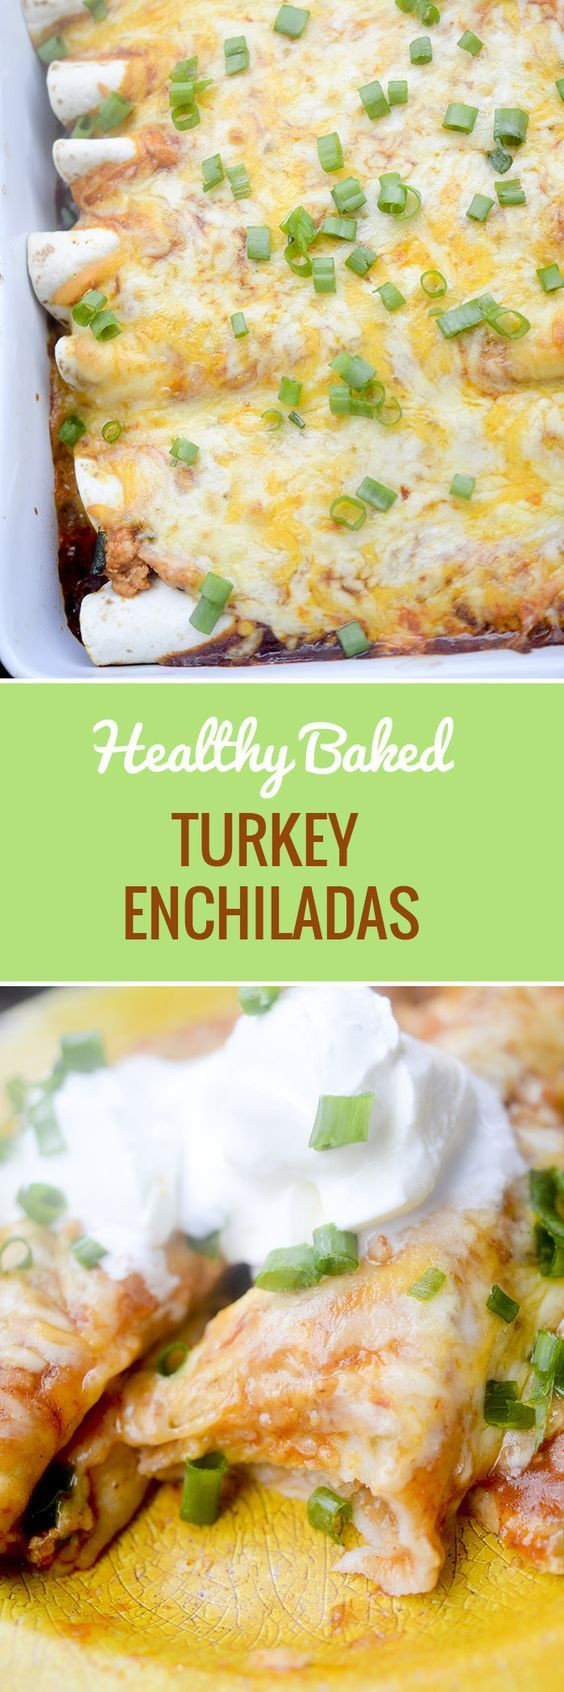 Low Calorie Recipes With Ground Turkey
 Healthy Baked Turkey Enchiladas Recipe